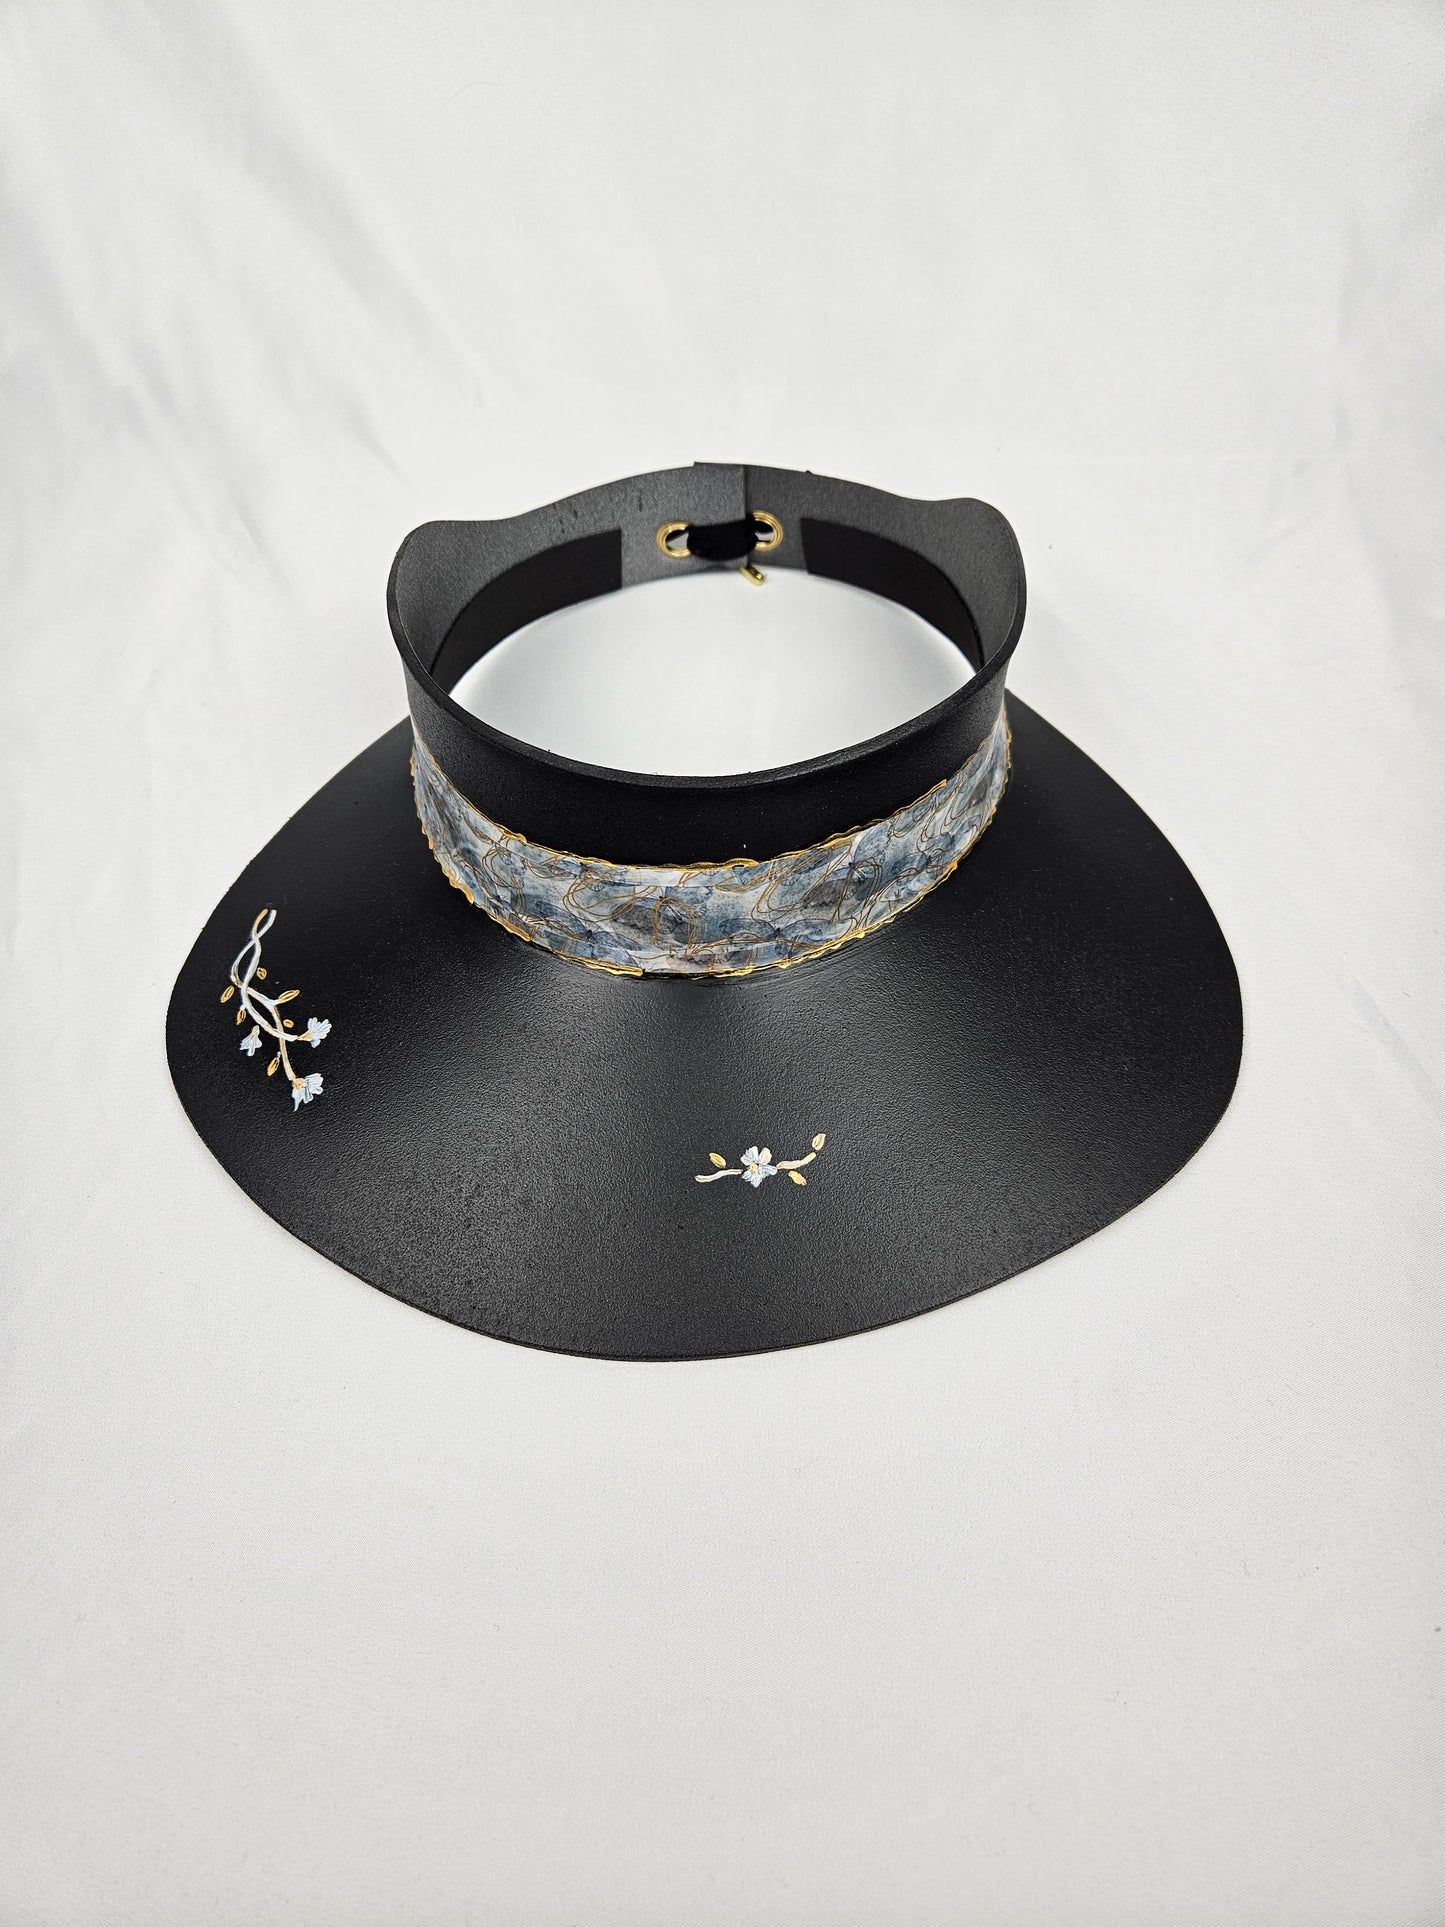 Timeless Black Audrey Foam Sun Visor Hat with Pale Blue Band and Handpainted Floral Motif: Big Brim, Swim, Pool, UV Resistant, No Headache